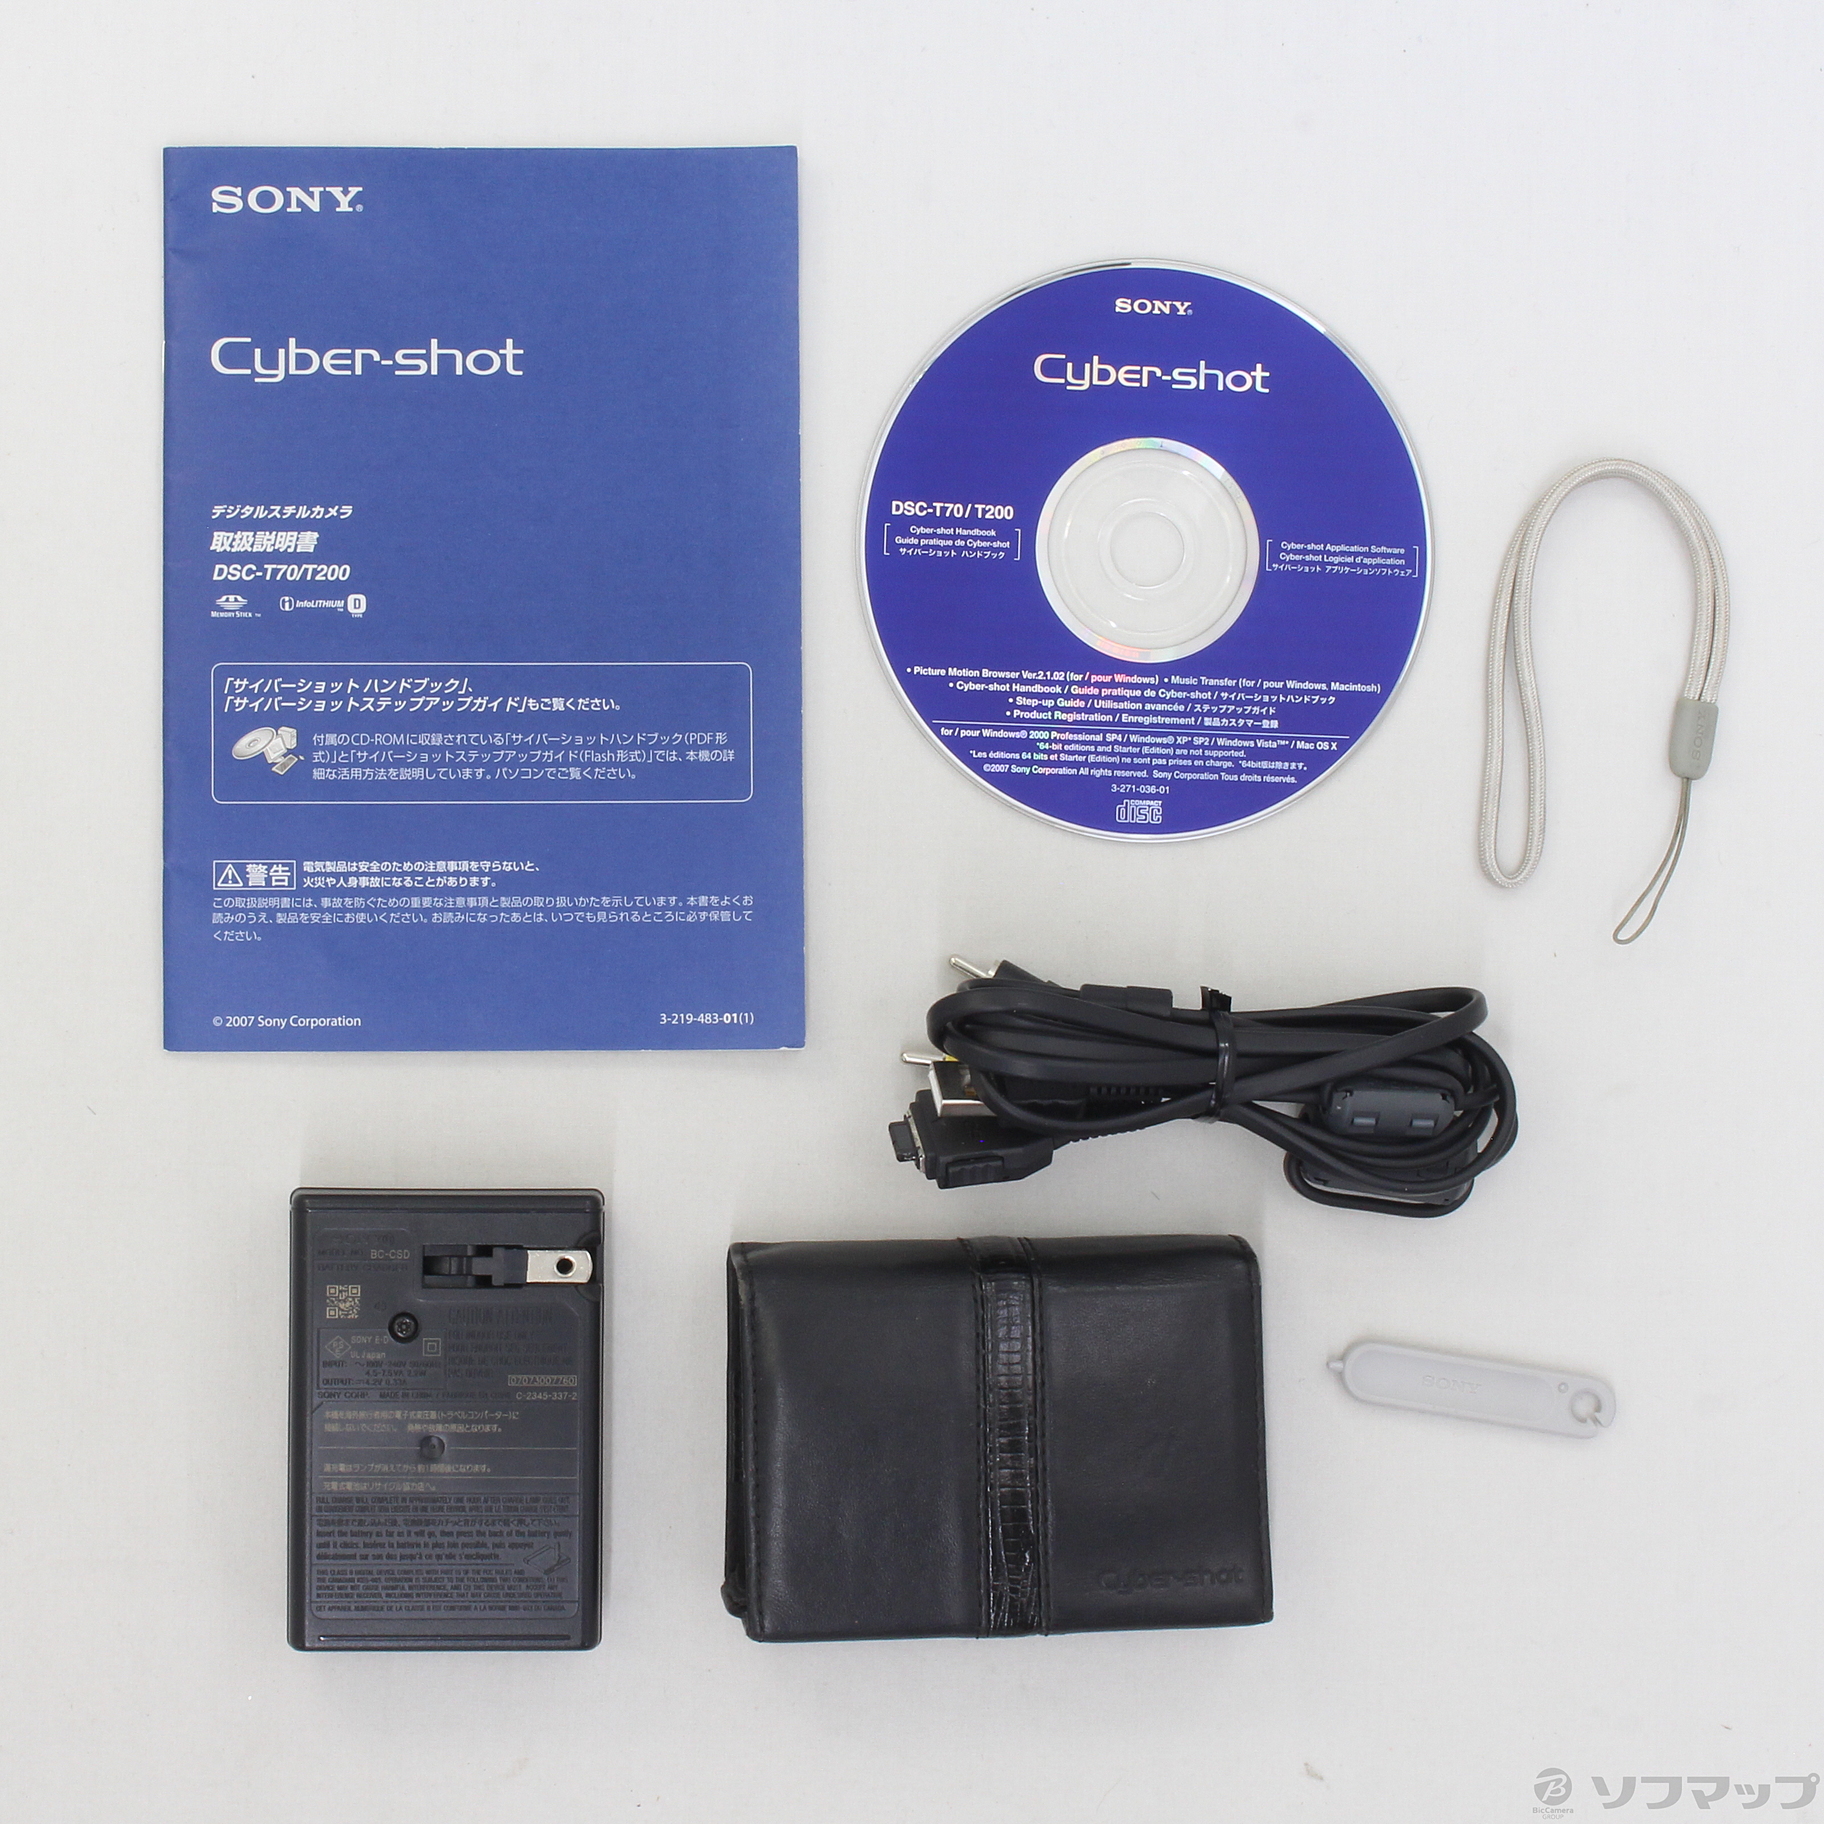 Sony CyberShot DSC-T70 ソニー デジタルカメラ ② - デジタルカメラ